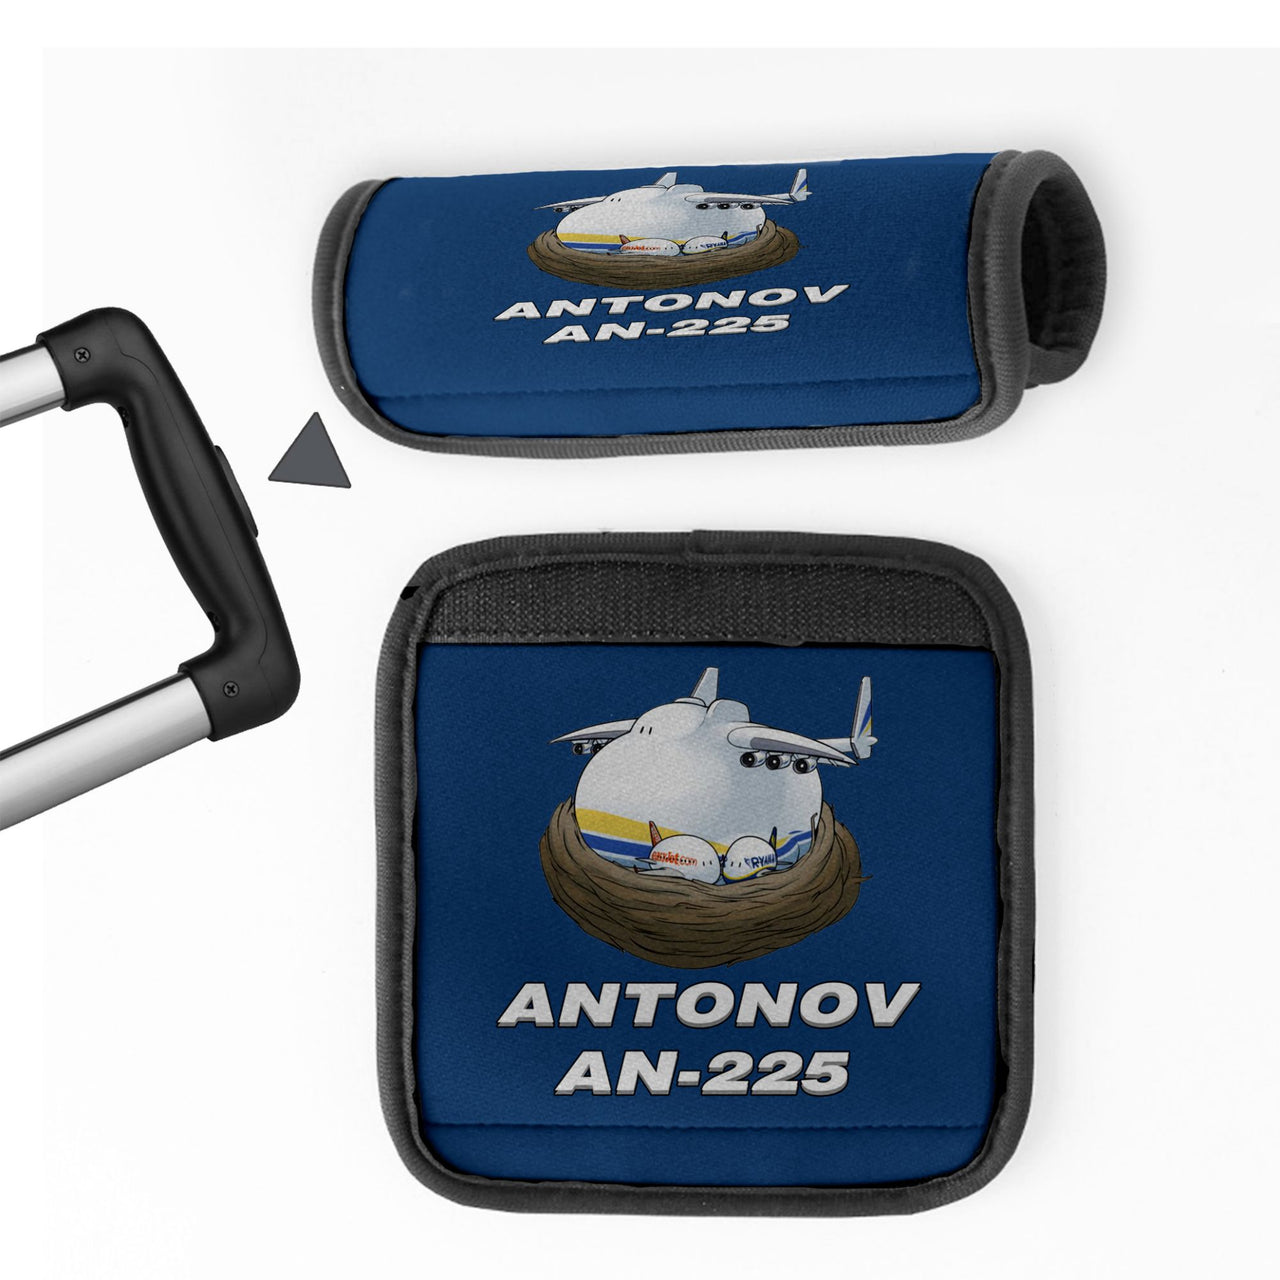 Antonov AN-225 (22) Designed Neoprene Luggage Handle Covers